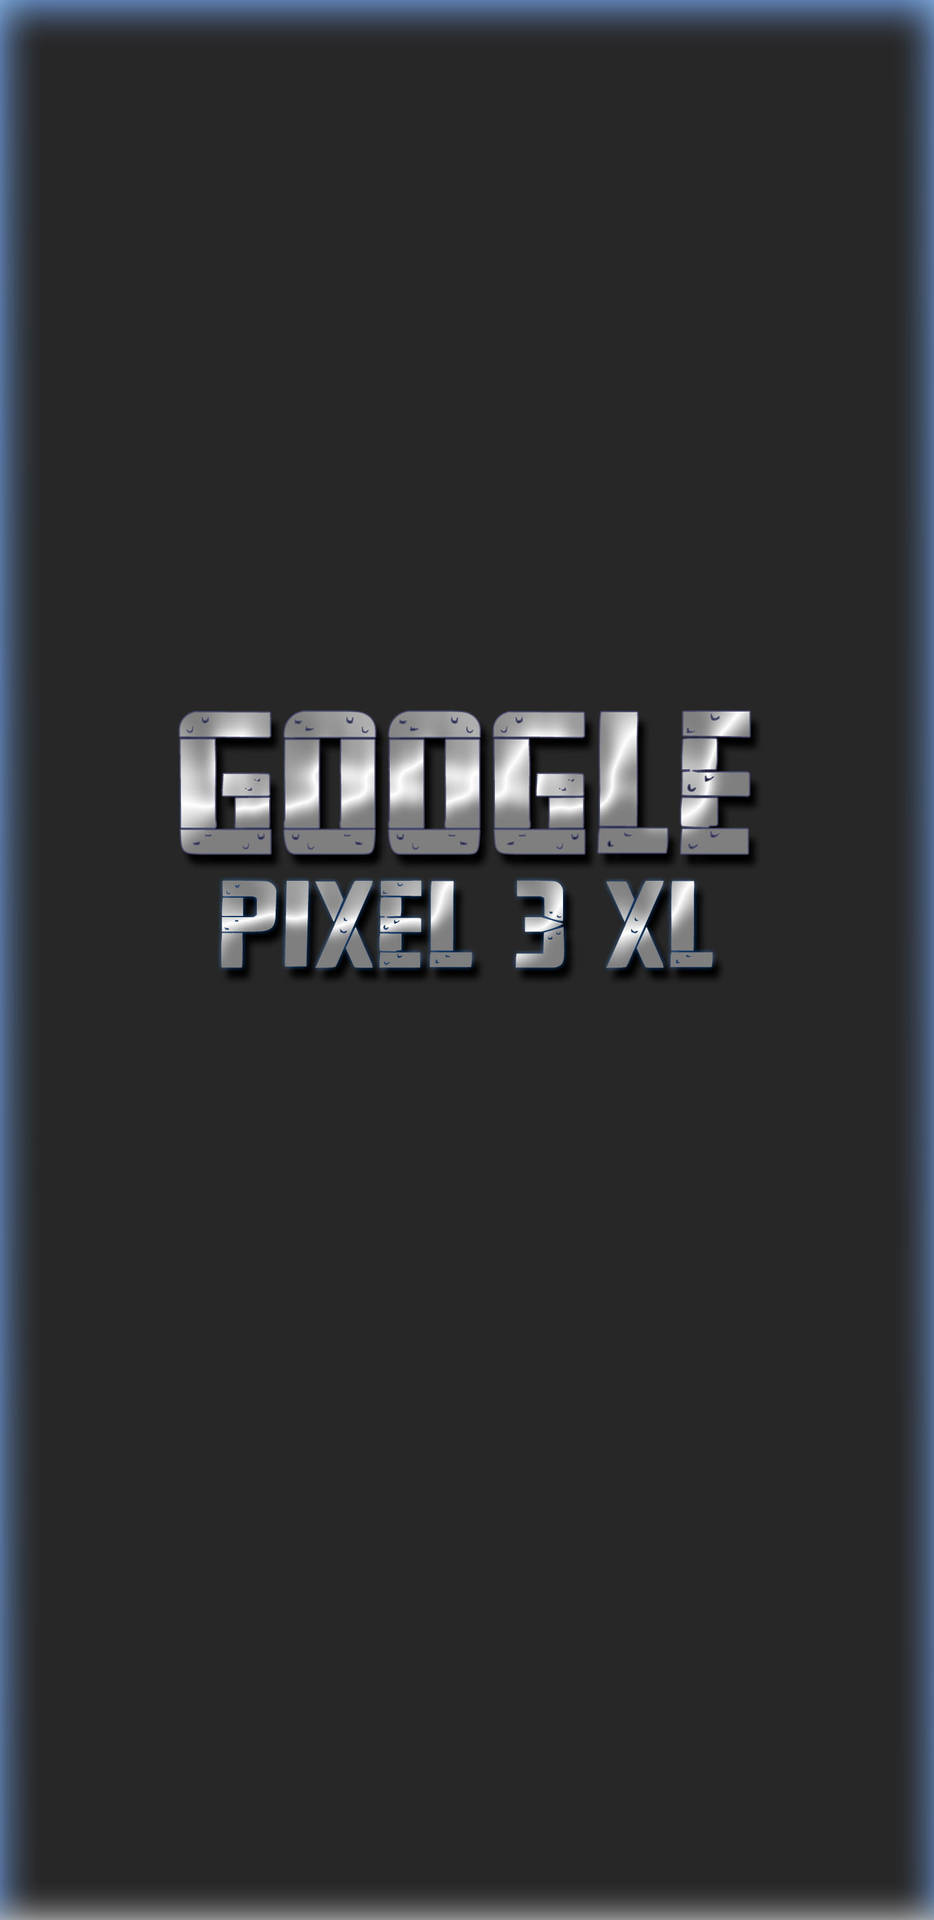 Free Pixel 3 Xl Wallpaper Downloads, [100+] Pixel 3 Xl Wallpapers for FREE  